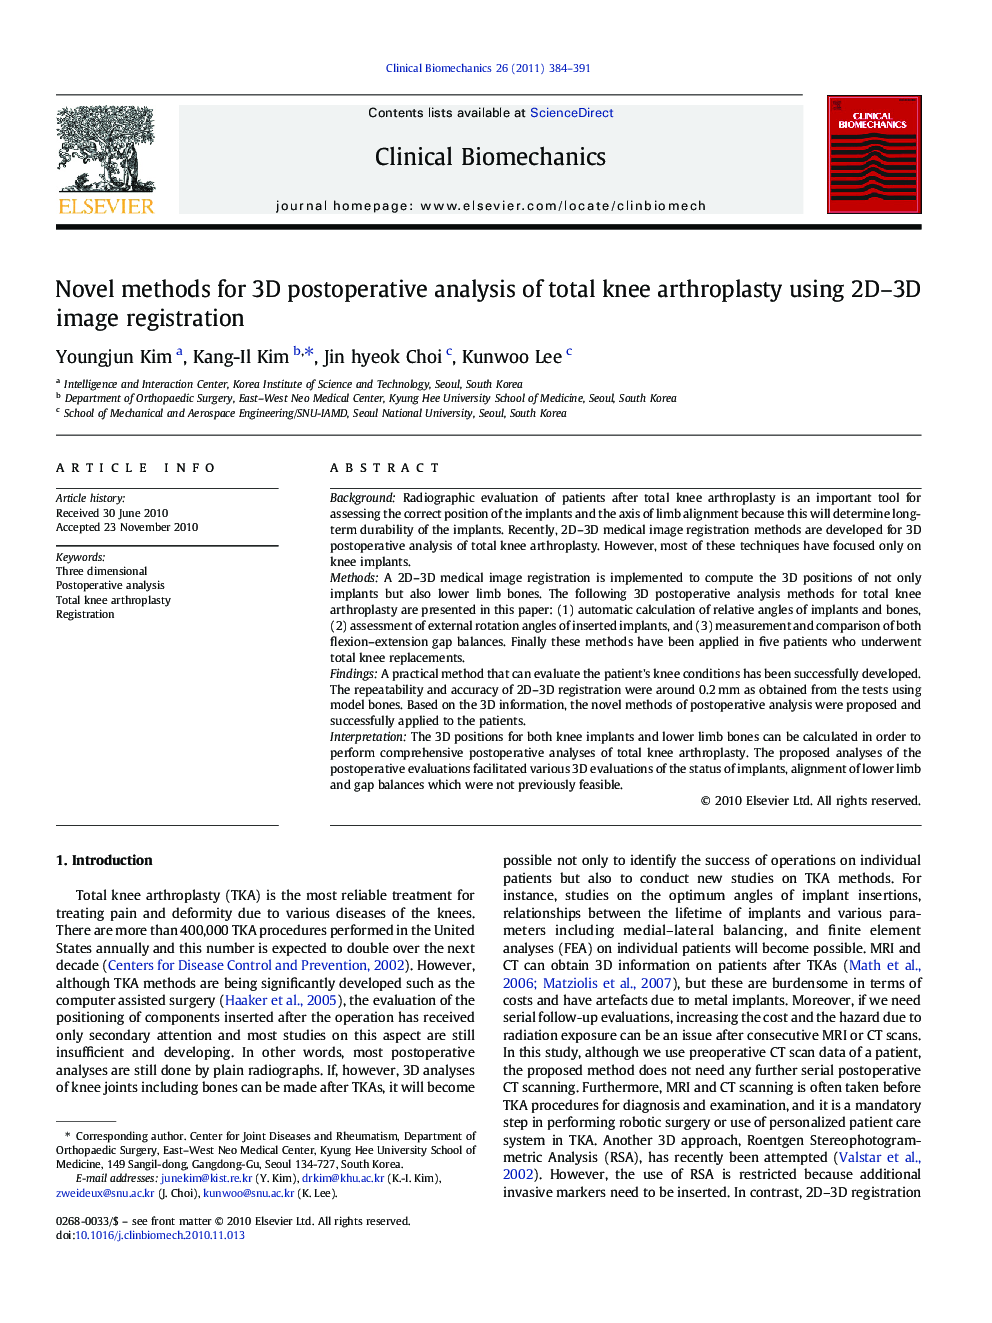 Novel methods for 3D postoperative analysis of total knee arthroplasty using 2D–3D image registration